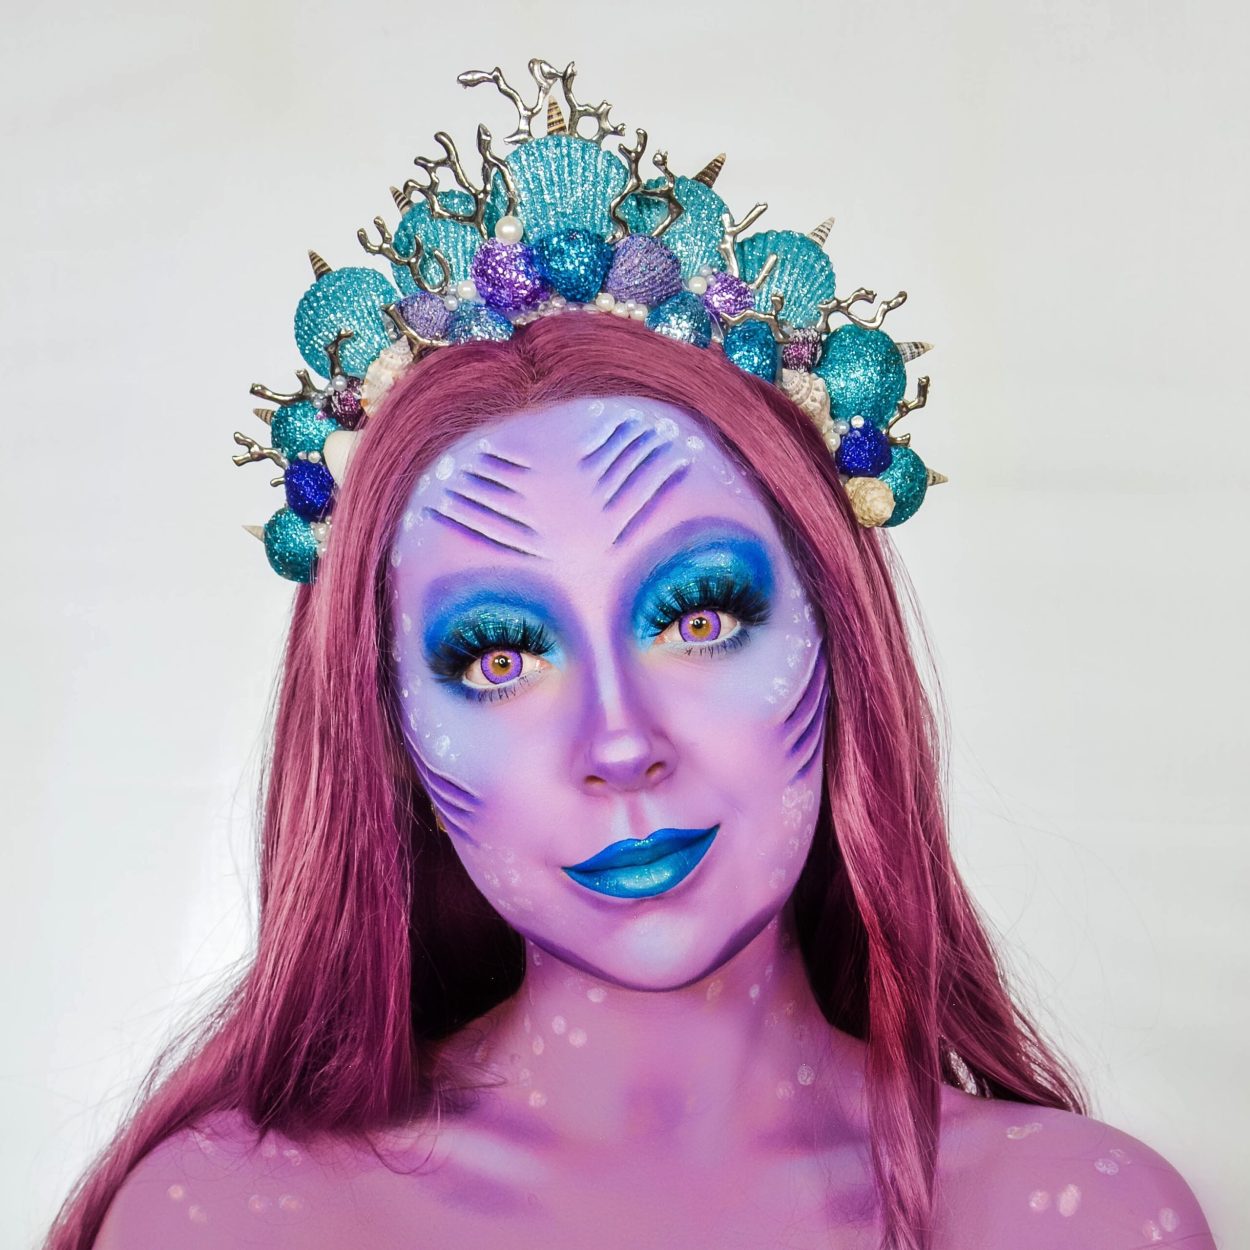 mermaid makeup - Google Search